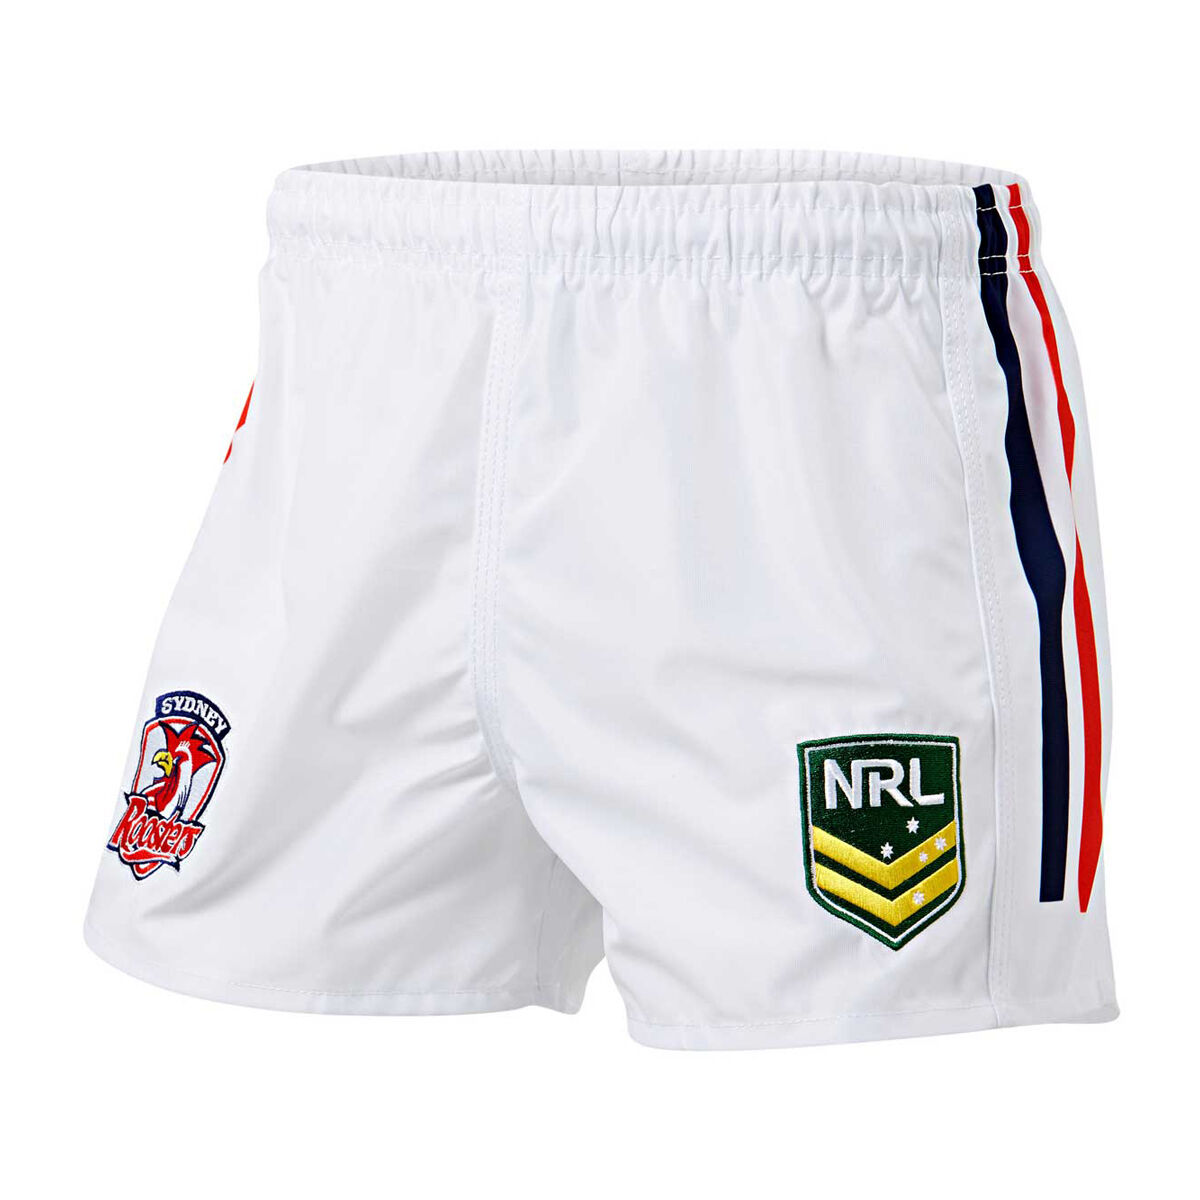 Sydney Roosters 2021 NRL Mens Training Gym Shorts Sizes S-4XL BNWT 